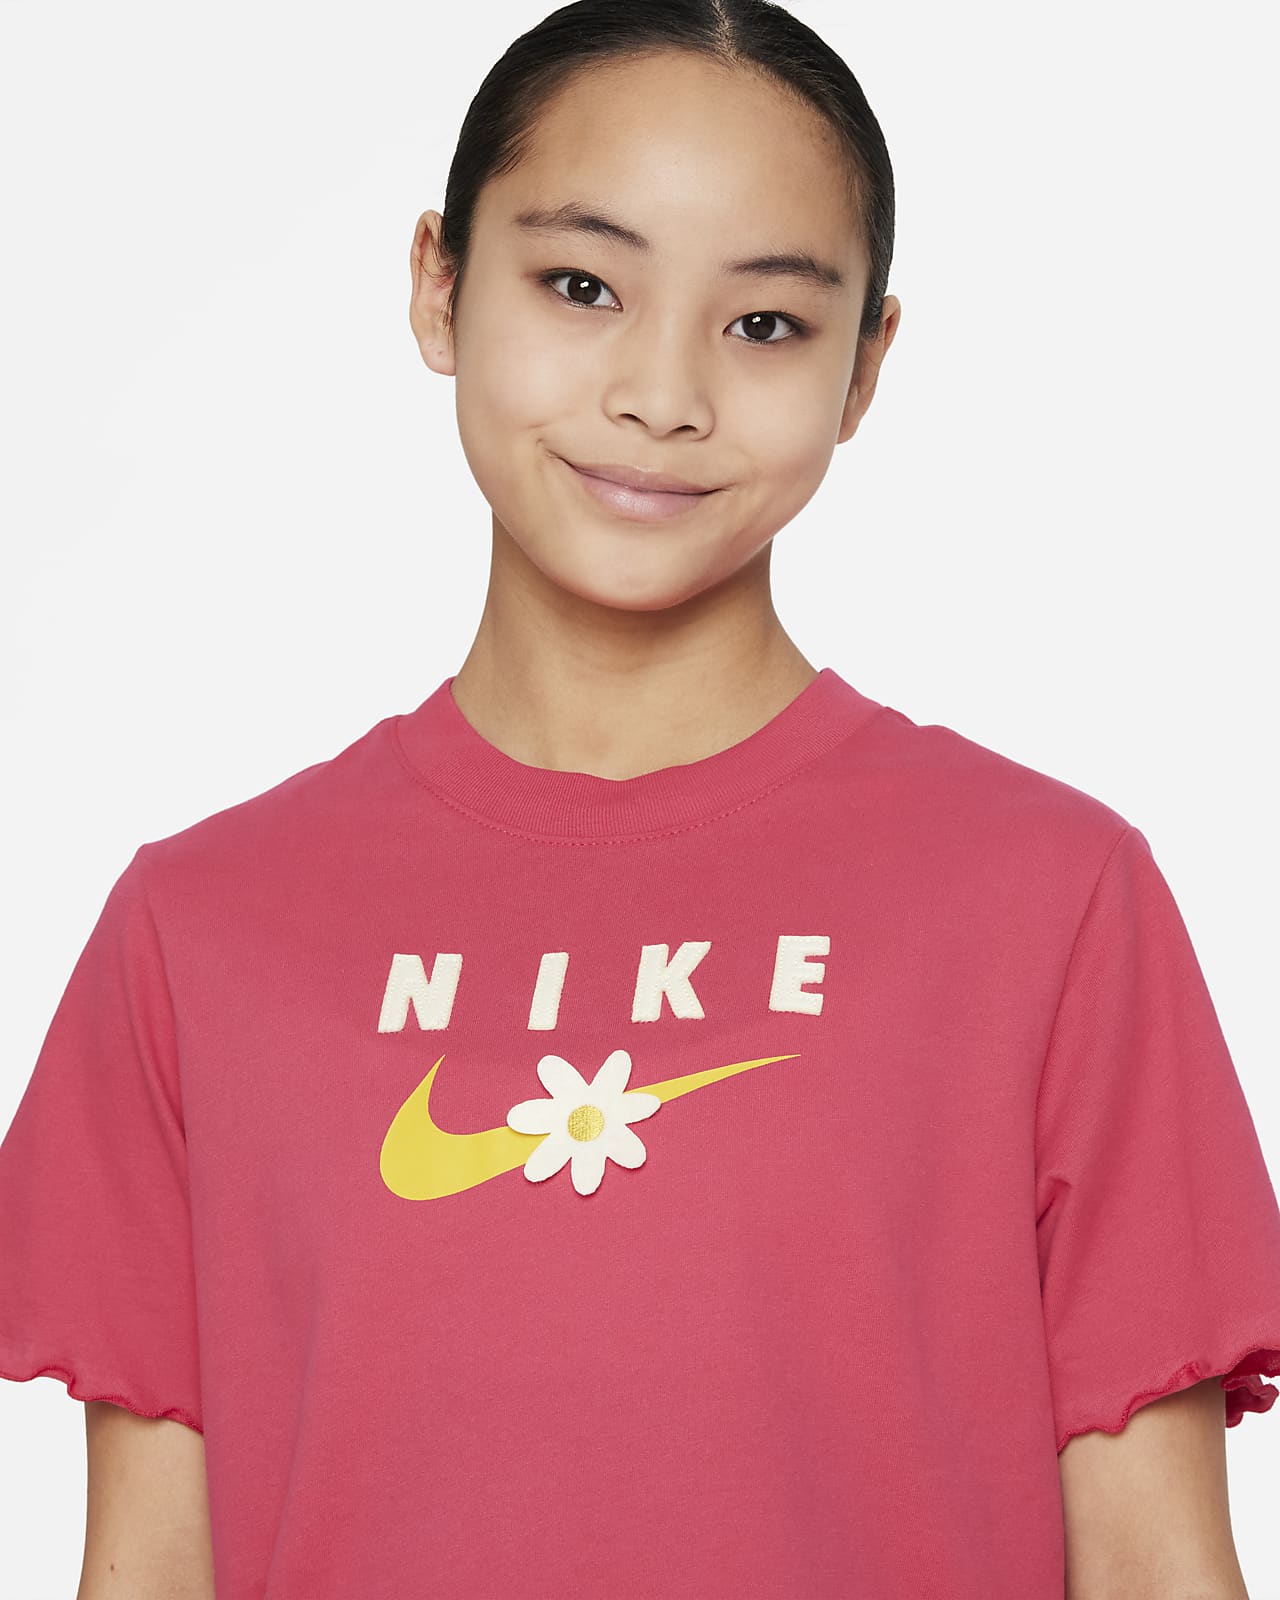 Nike Sportswear Older Kids' (Girls') T-Shirt. Nike ID